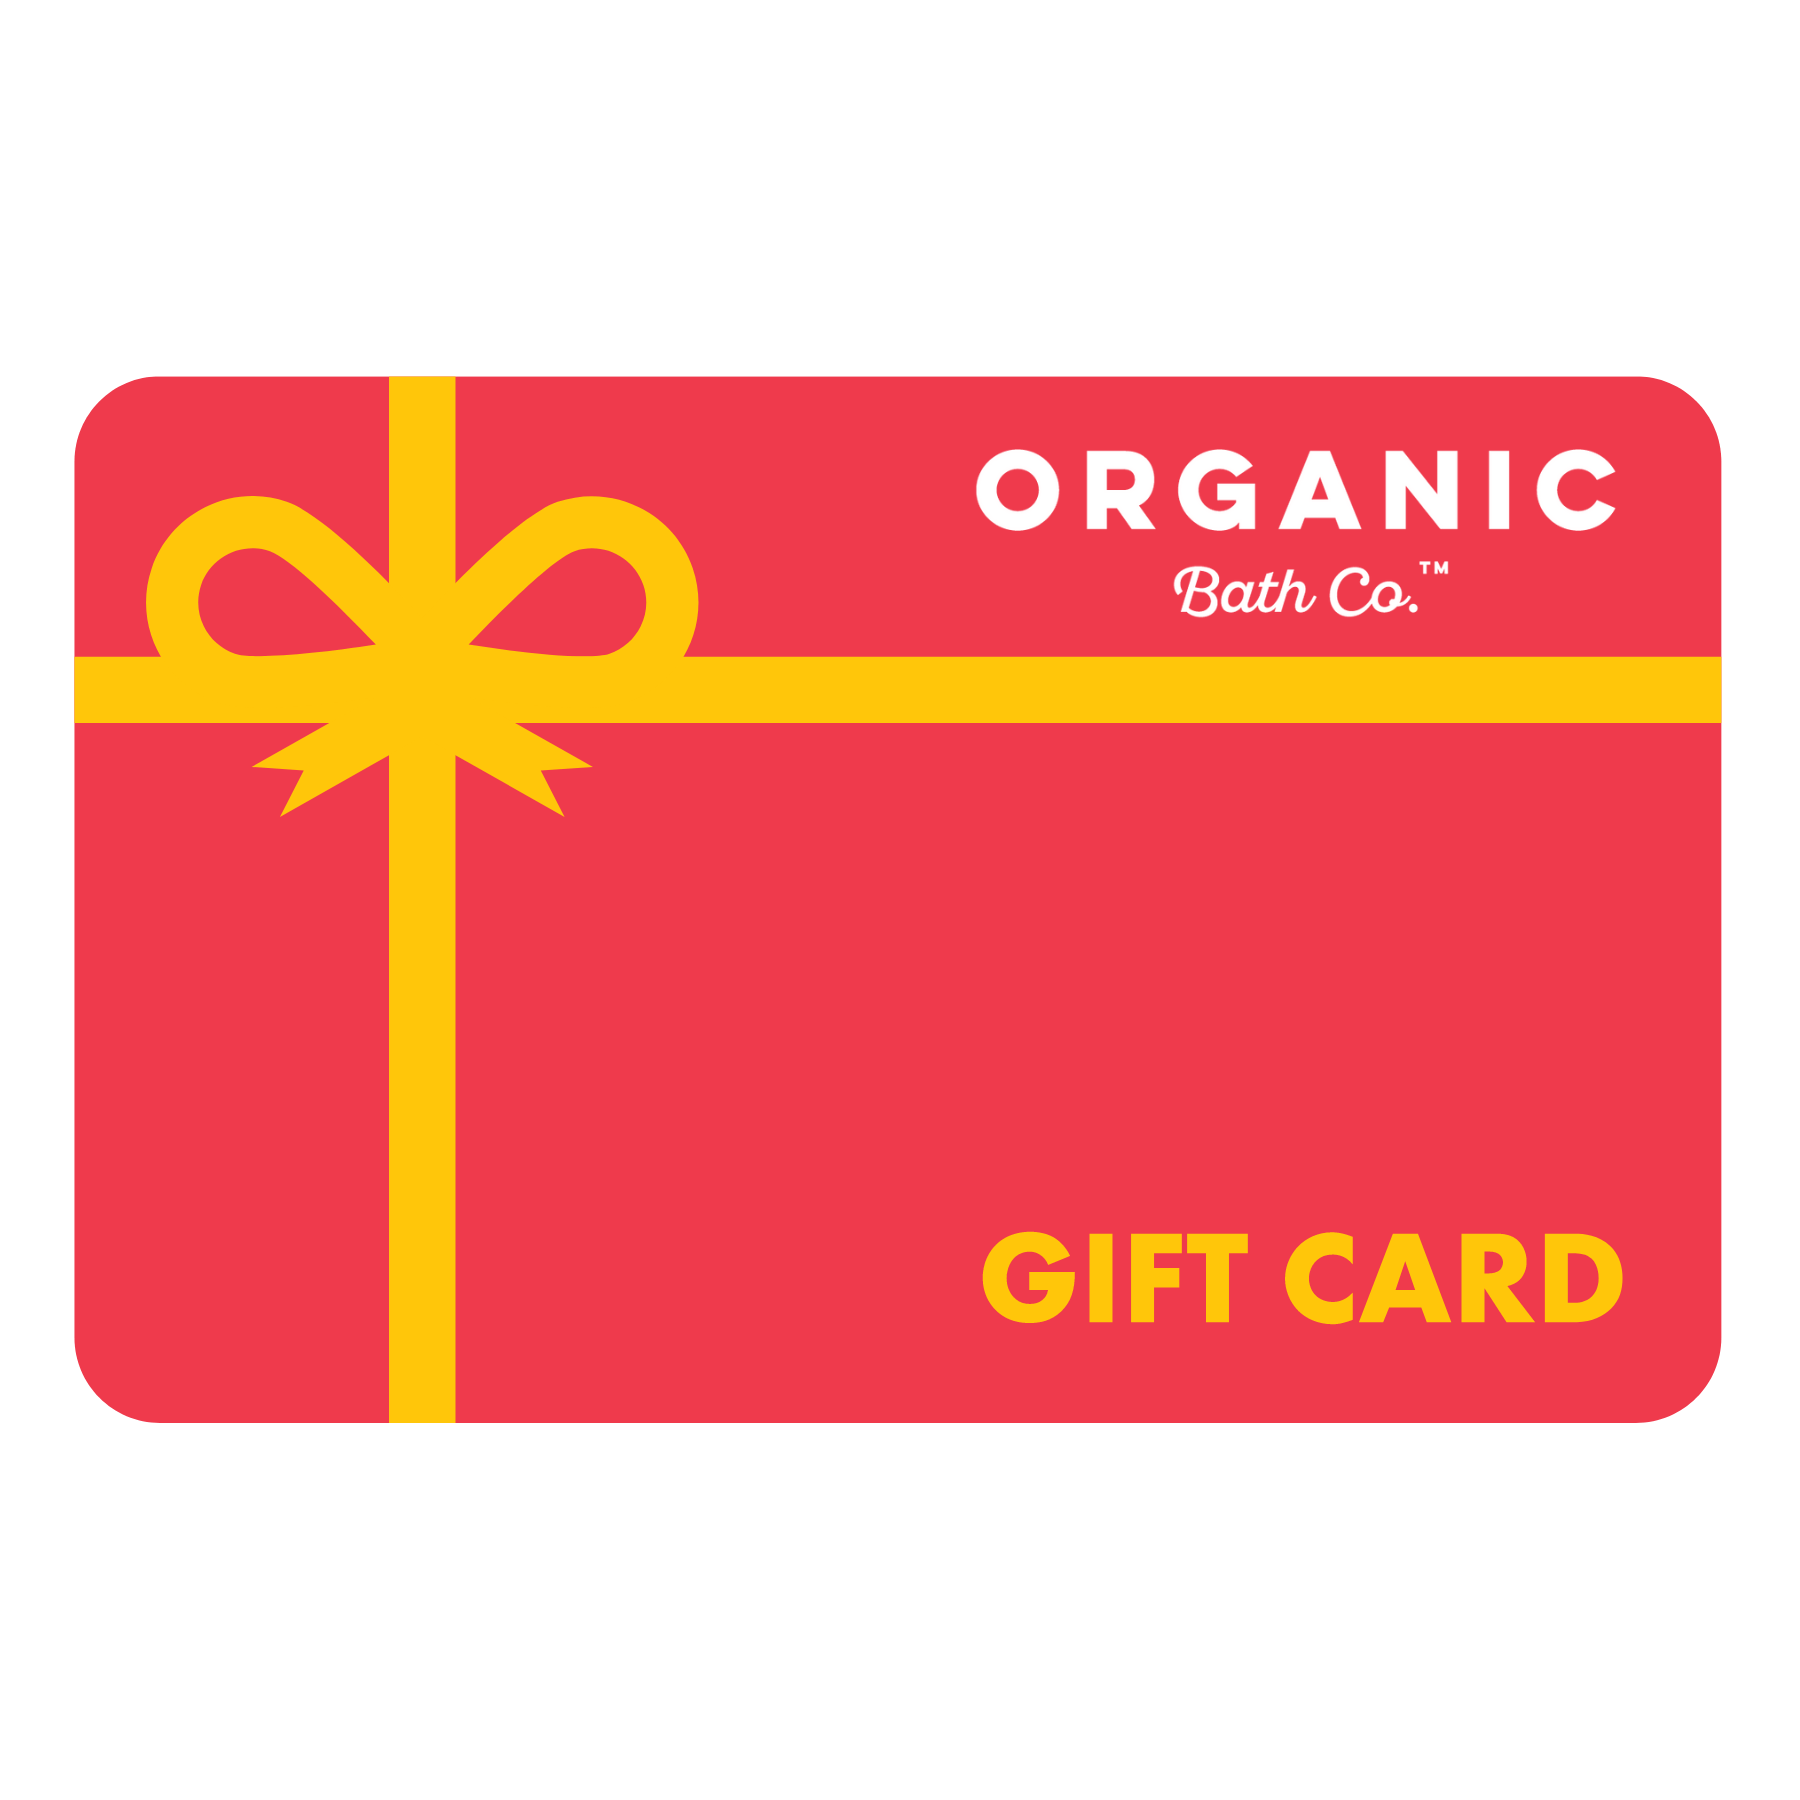 Gift card - Organic Bath Co.